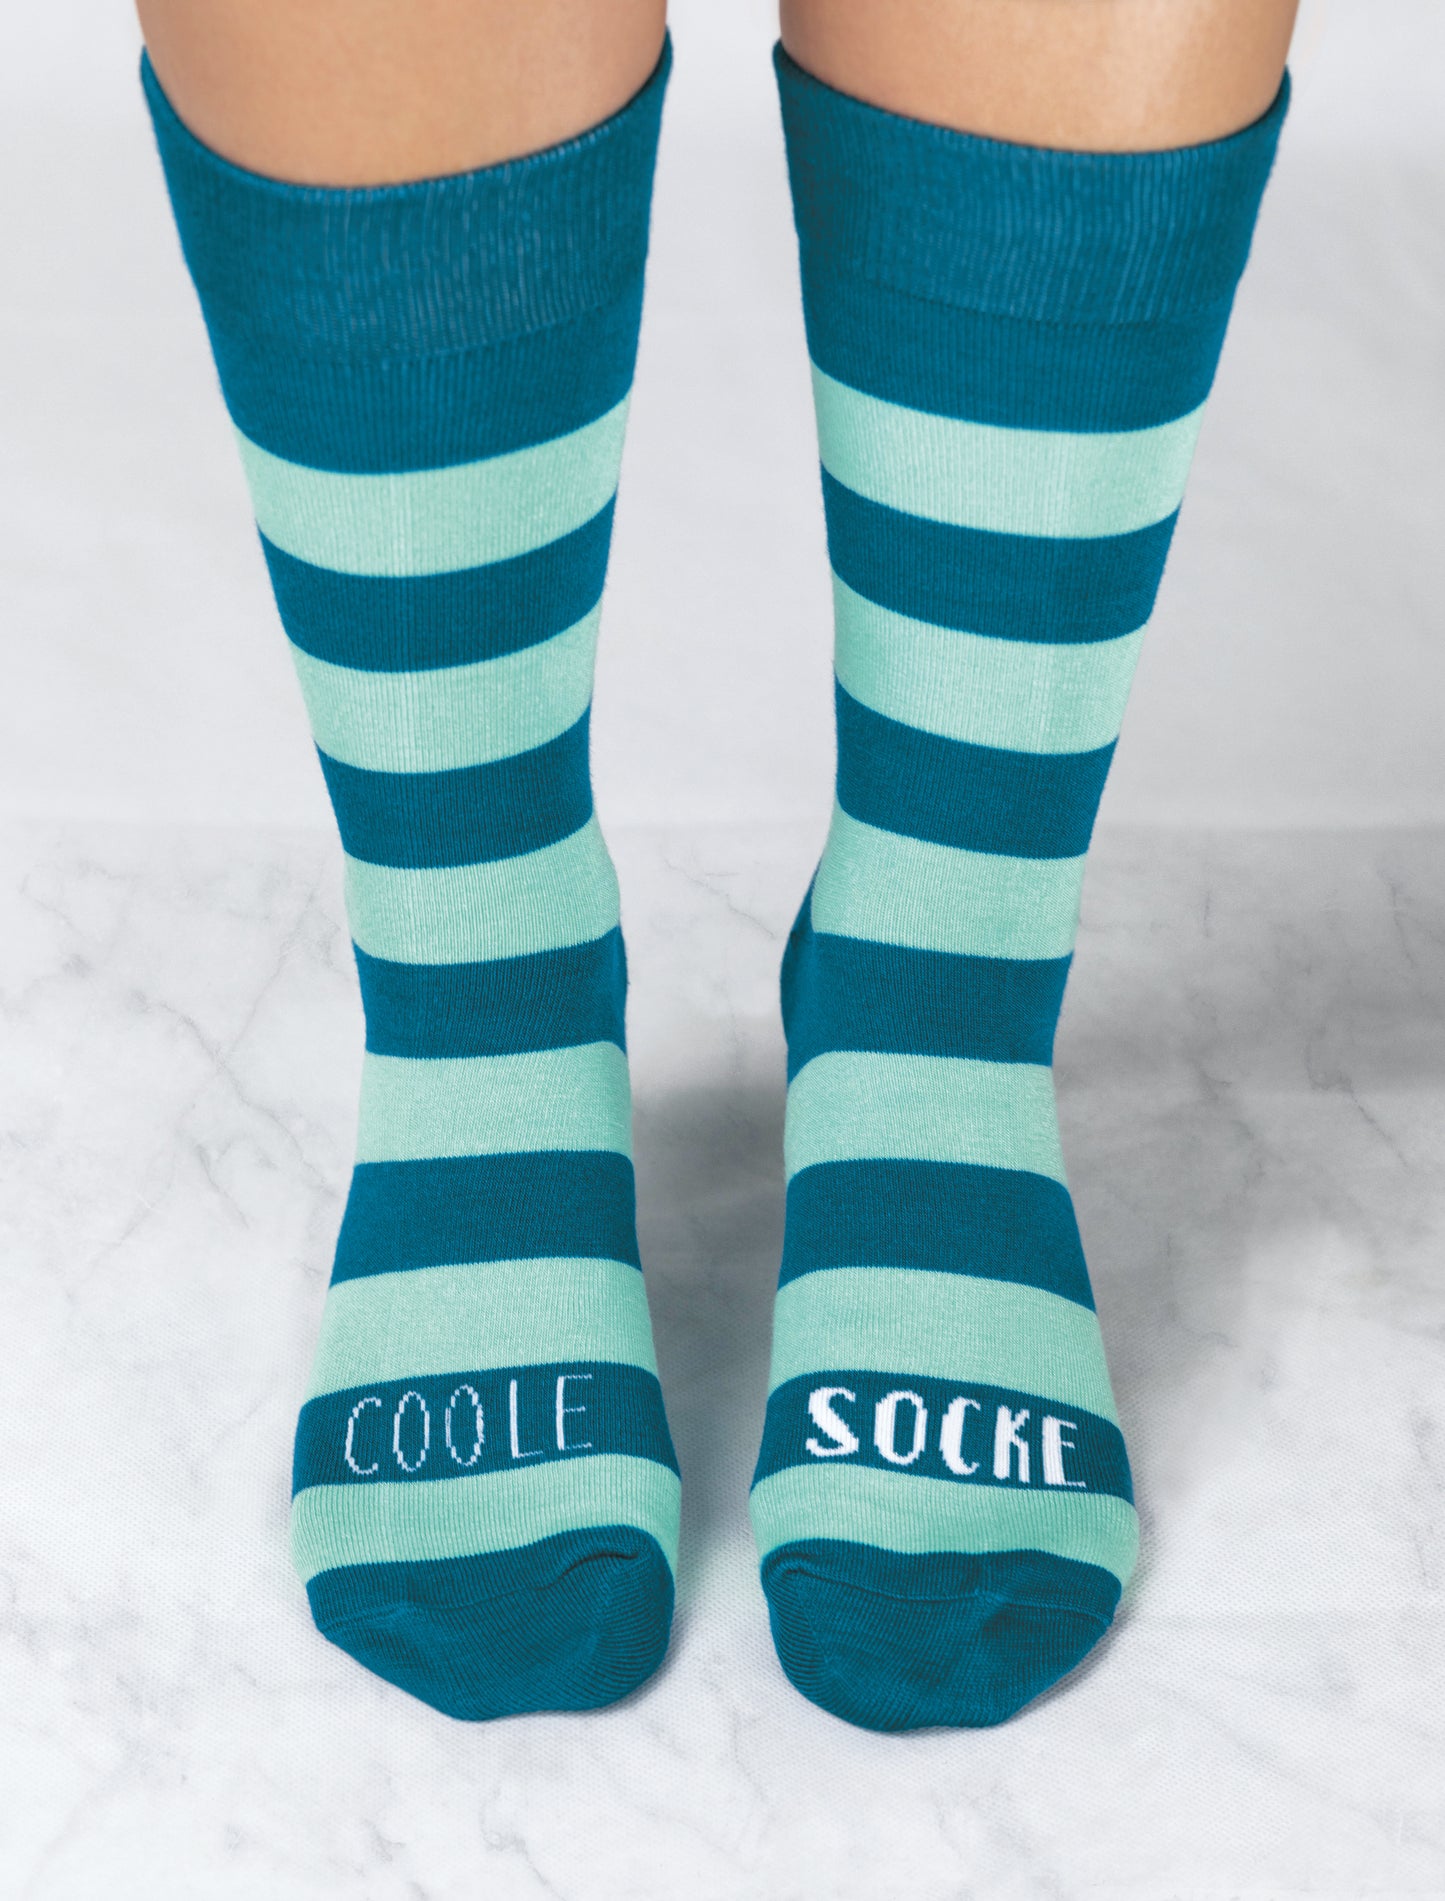 Coole Socke